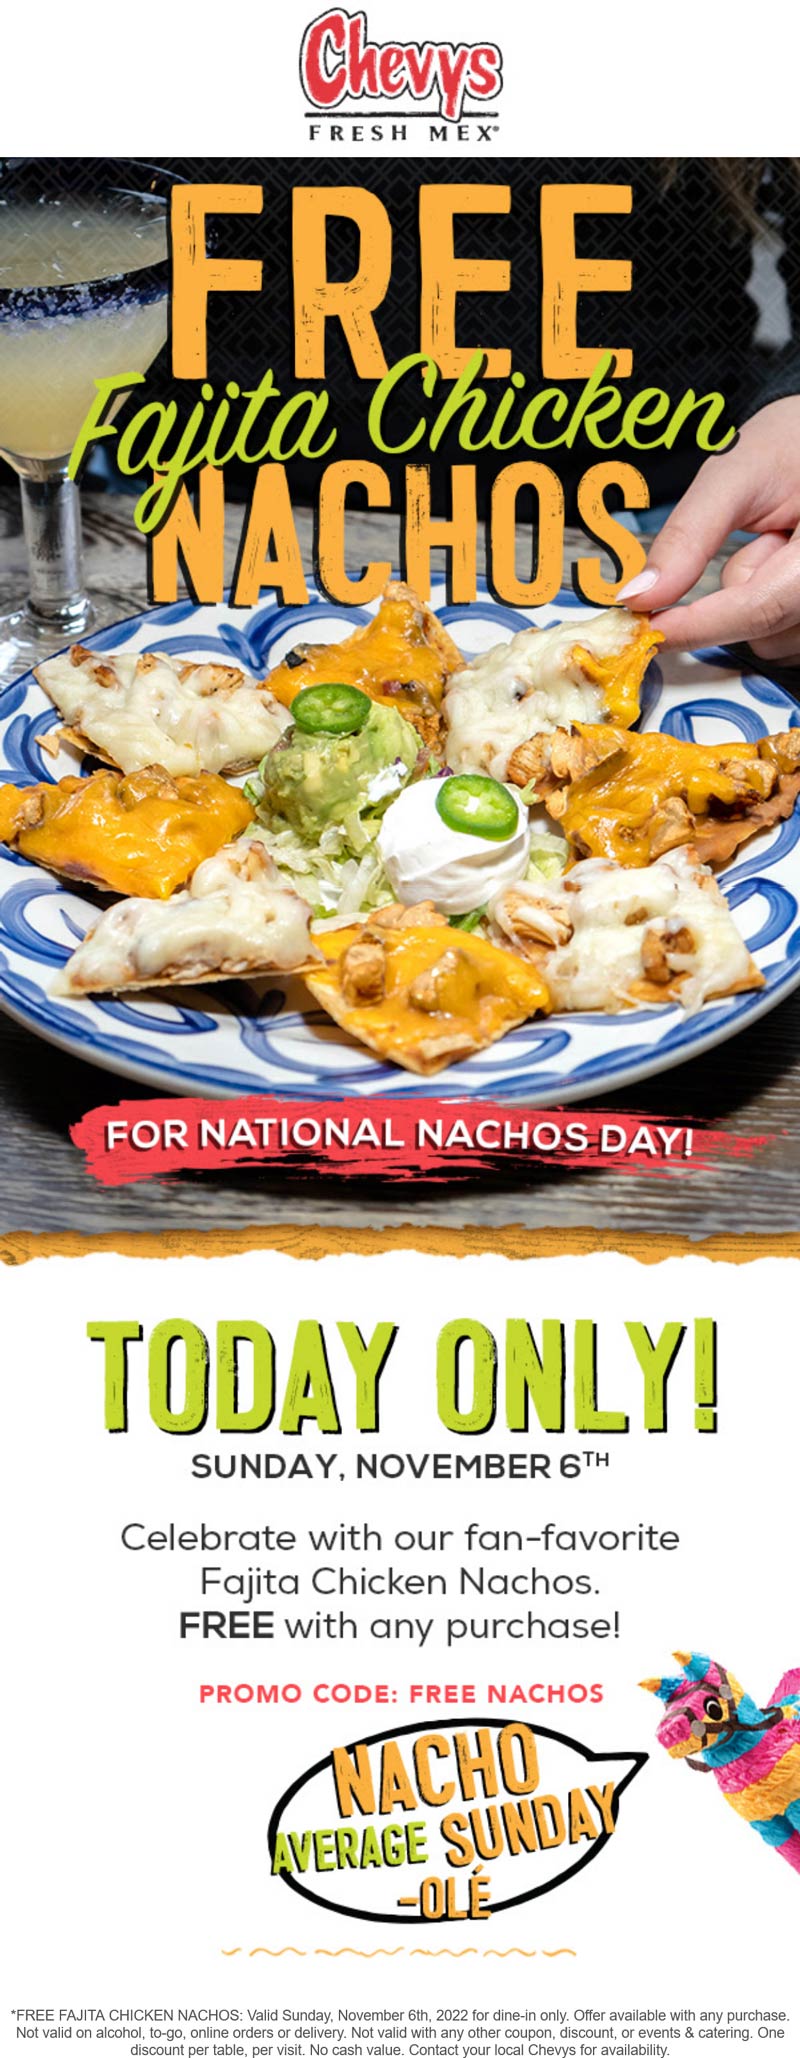 Chevys restaurants Coupon  Free chicken nachos with any order today at Chevys Fresh Mex via promo code FREE NACHOS #chevys 